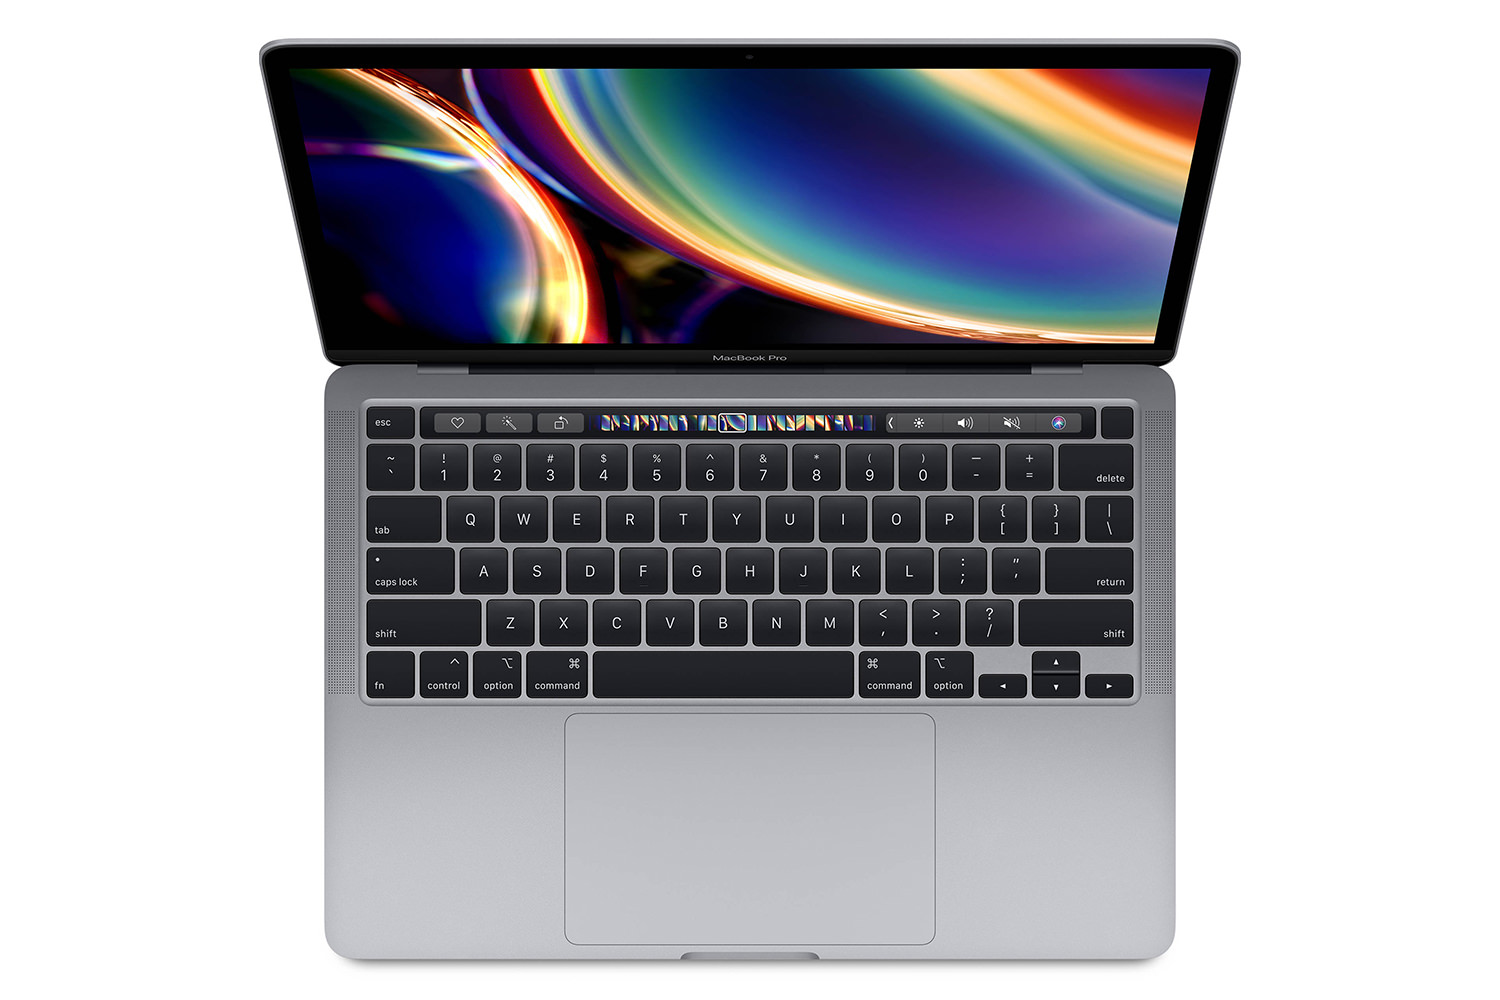 Apple MacBook Pro 13 Inch 2020 Laptop Top View Keyboard - Display & Touch Bar / Apple Macbook Pro 13 2020 - MWP42